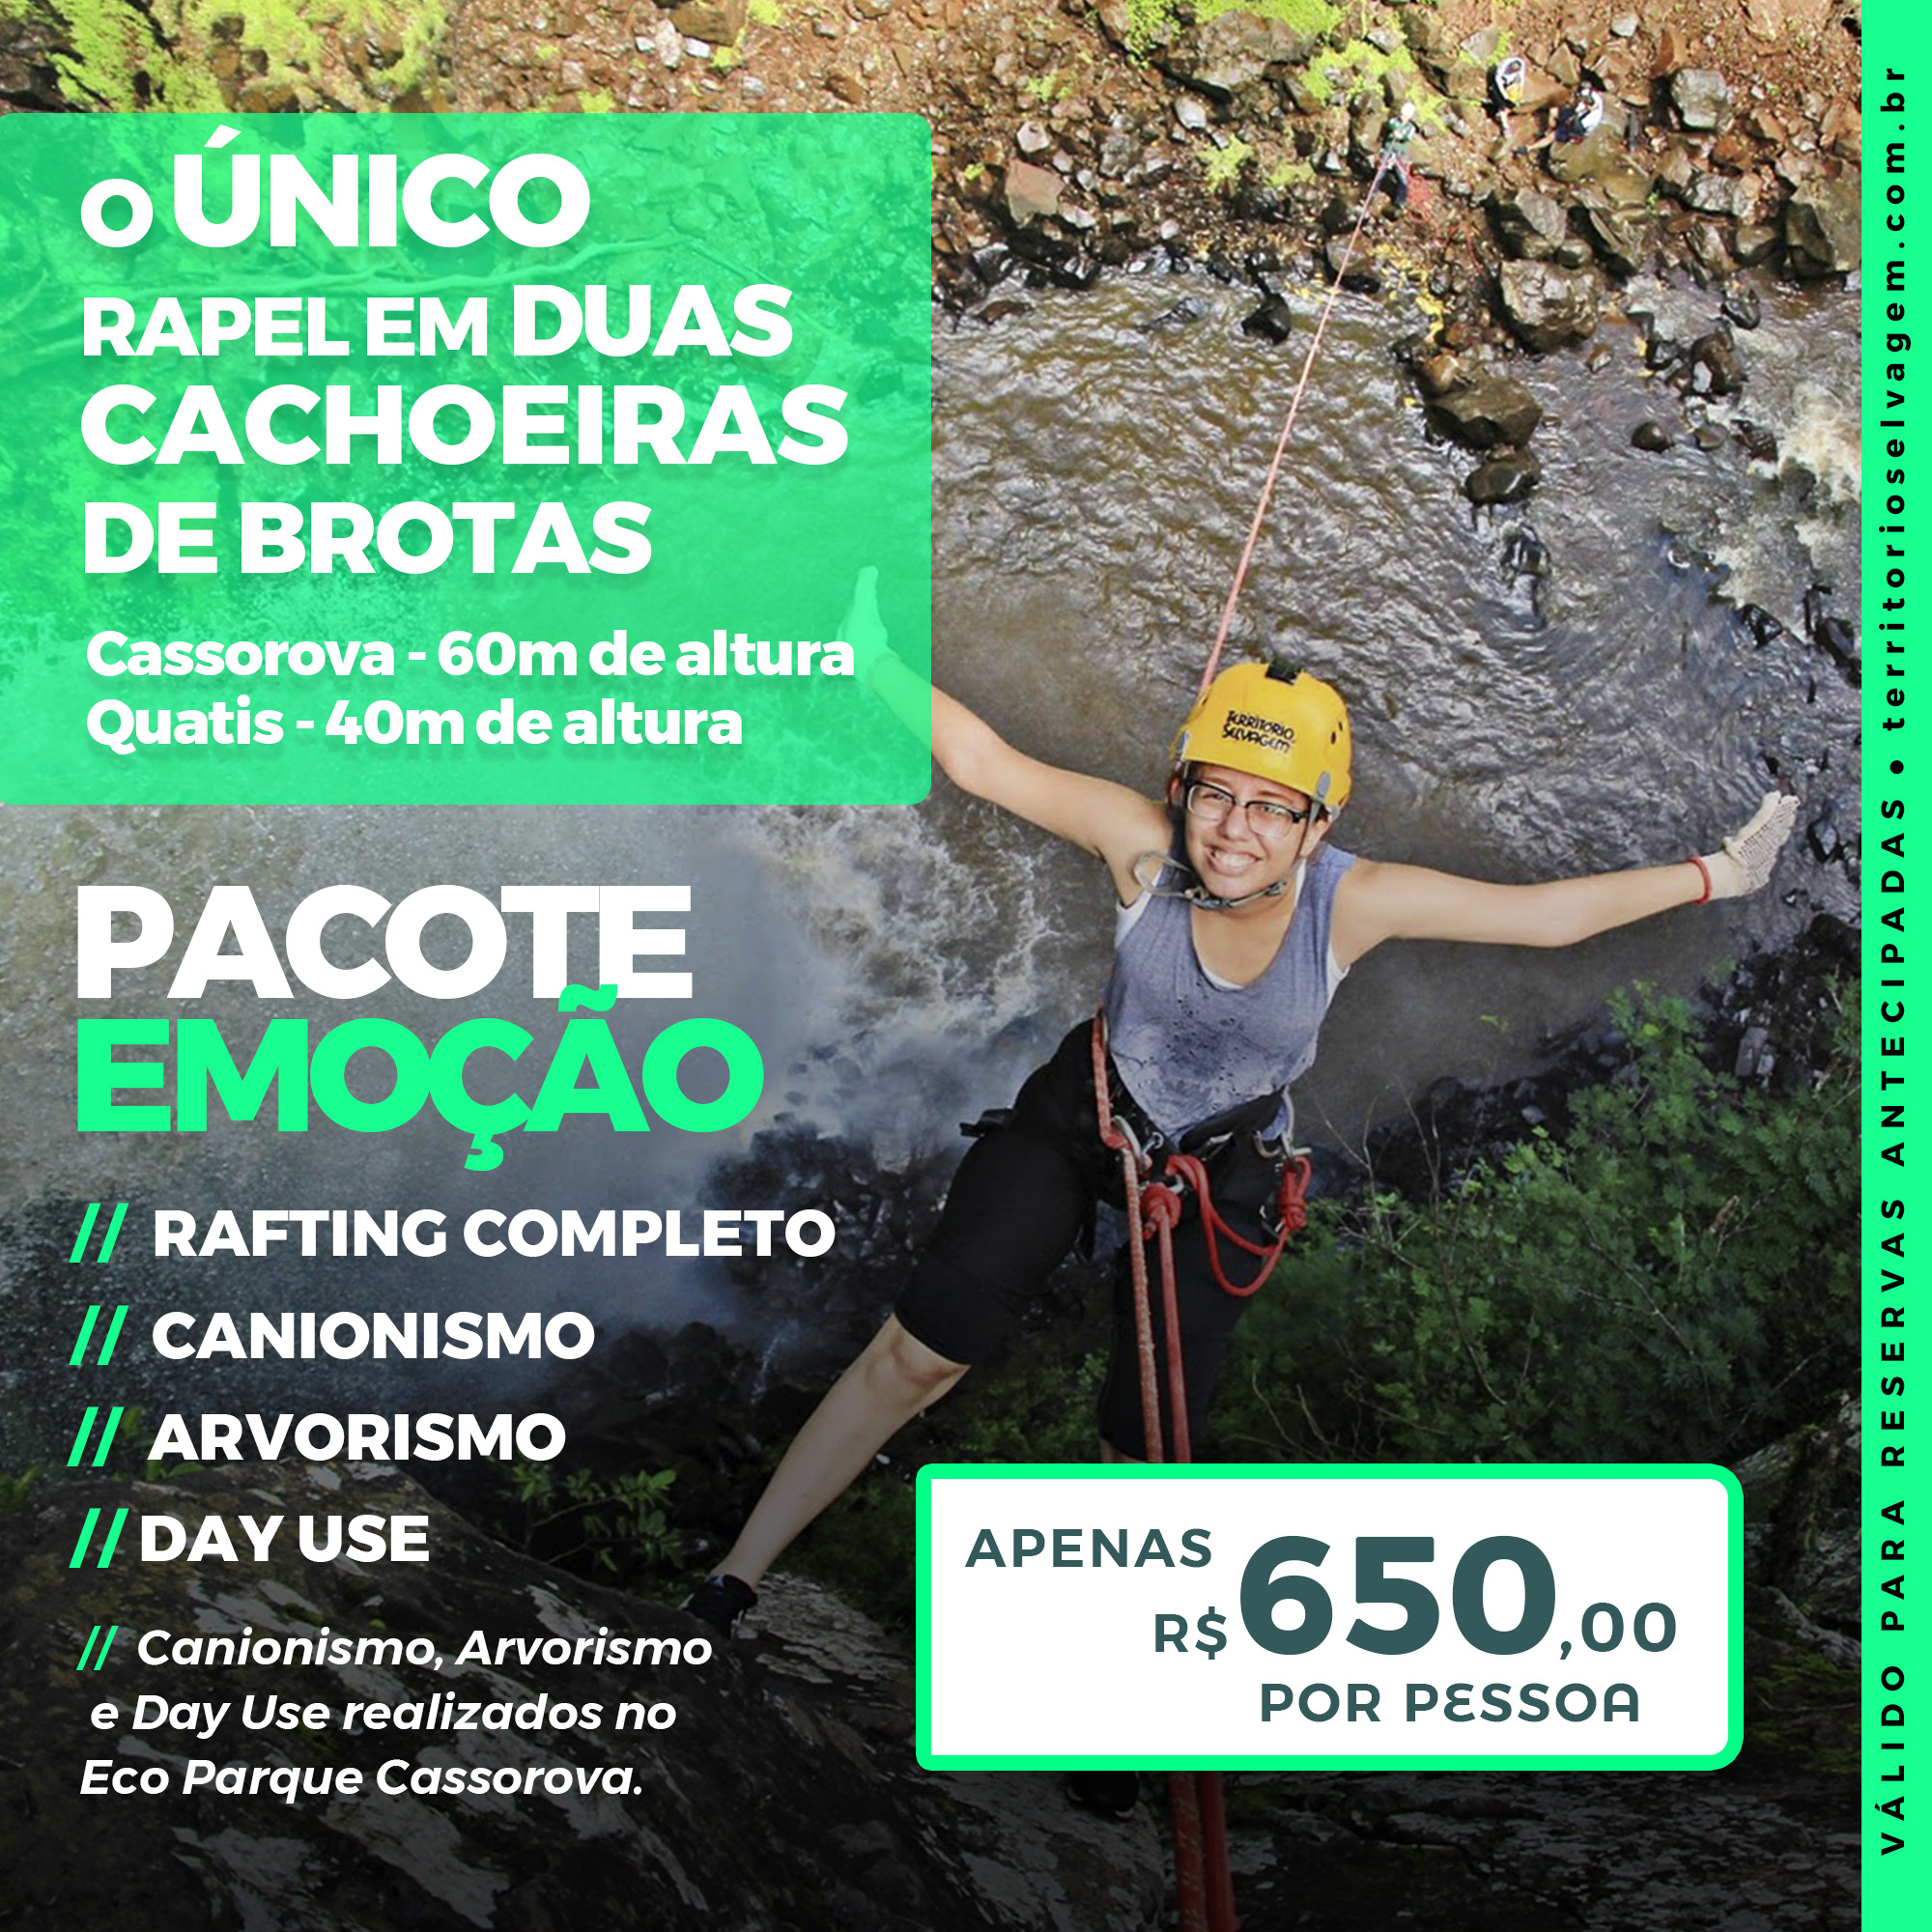 Rafting Completo  + Canionismo + Arvorismo + Day Use
*Atividades no Eco Parque Cassorova (Exceto Rafting)